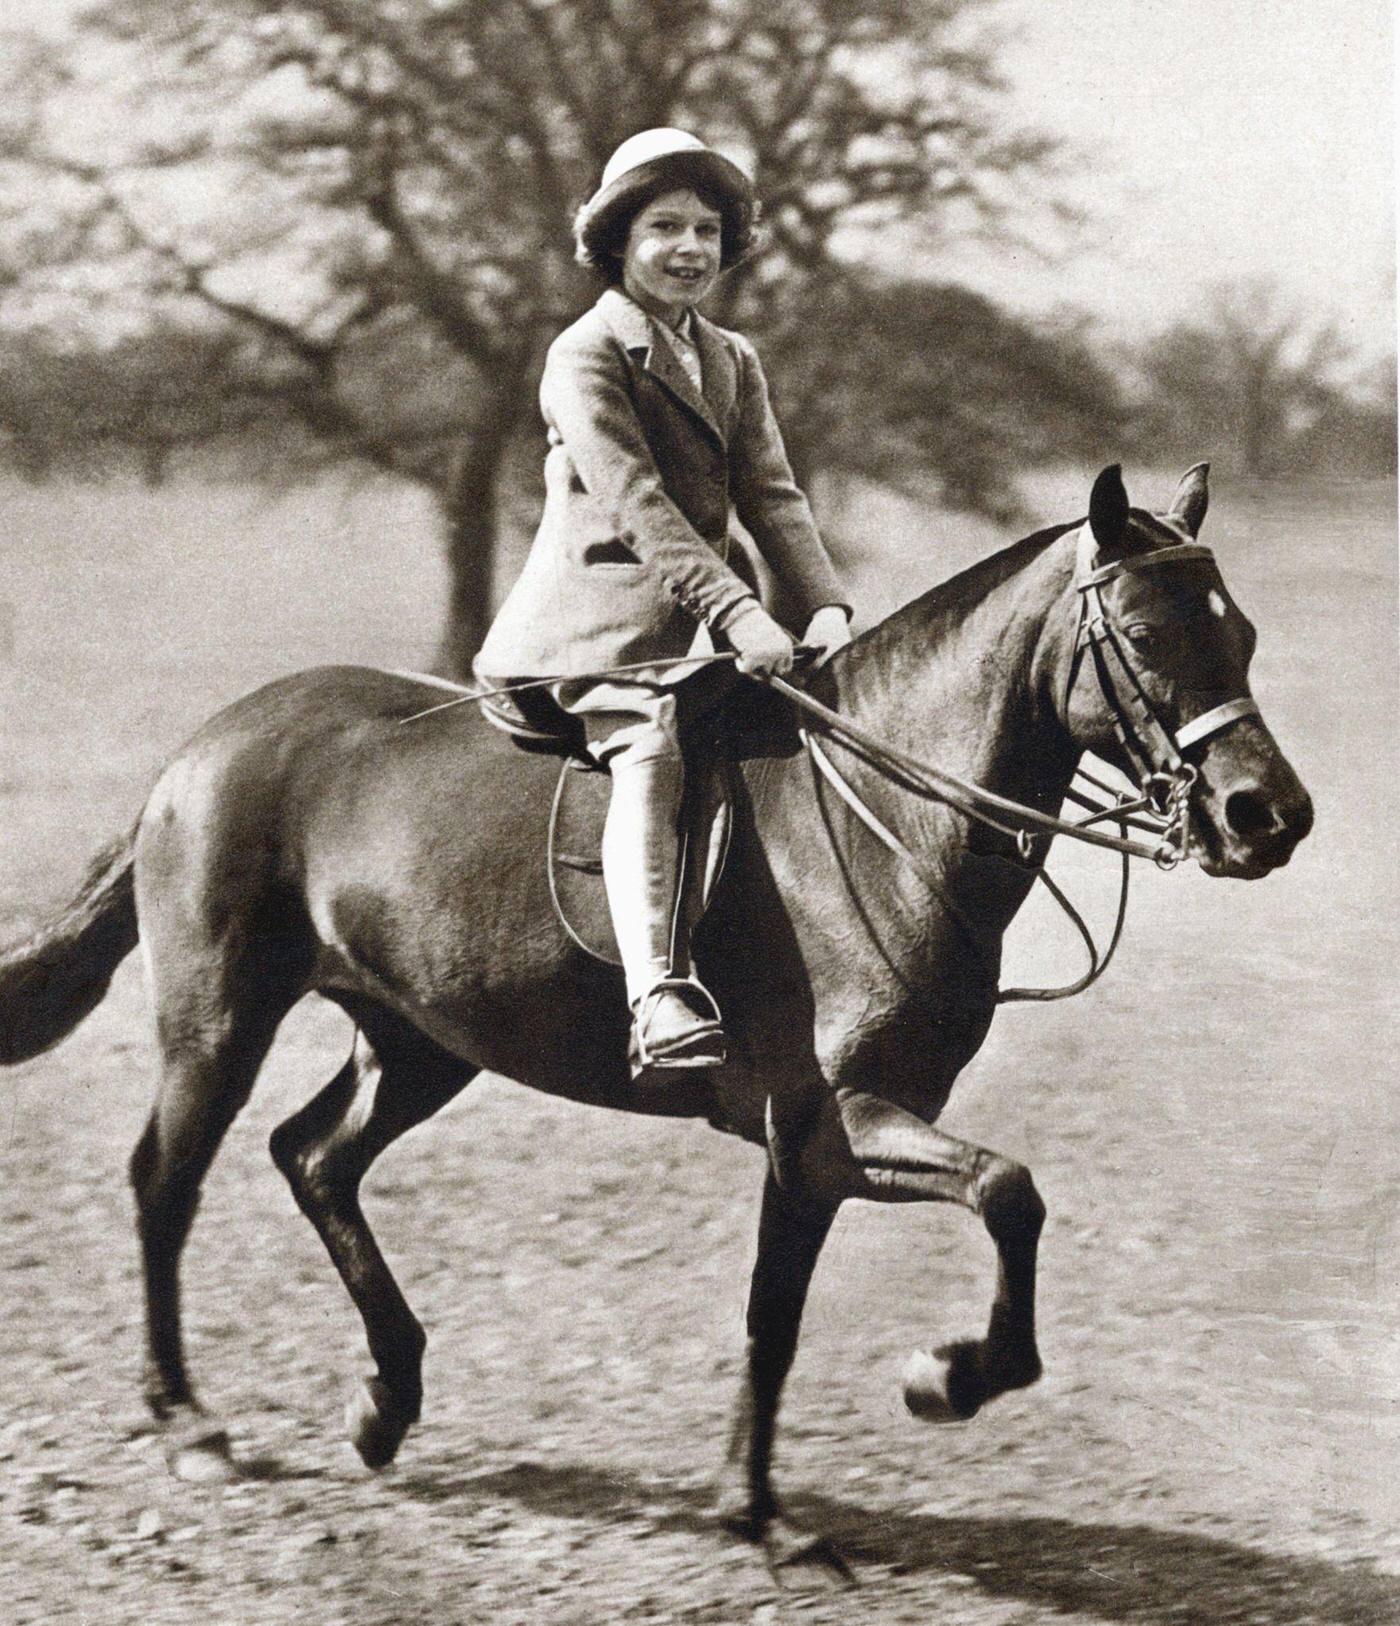 Princess Elizabeth riding her pony in Windsor Great Park, 1930s.